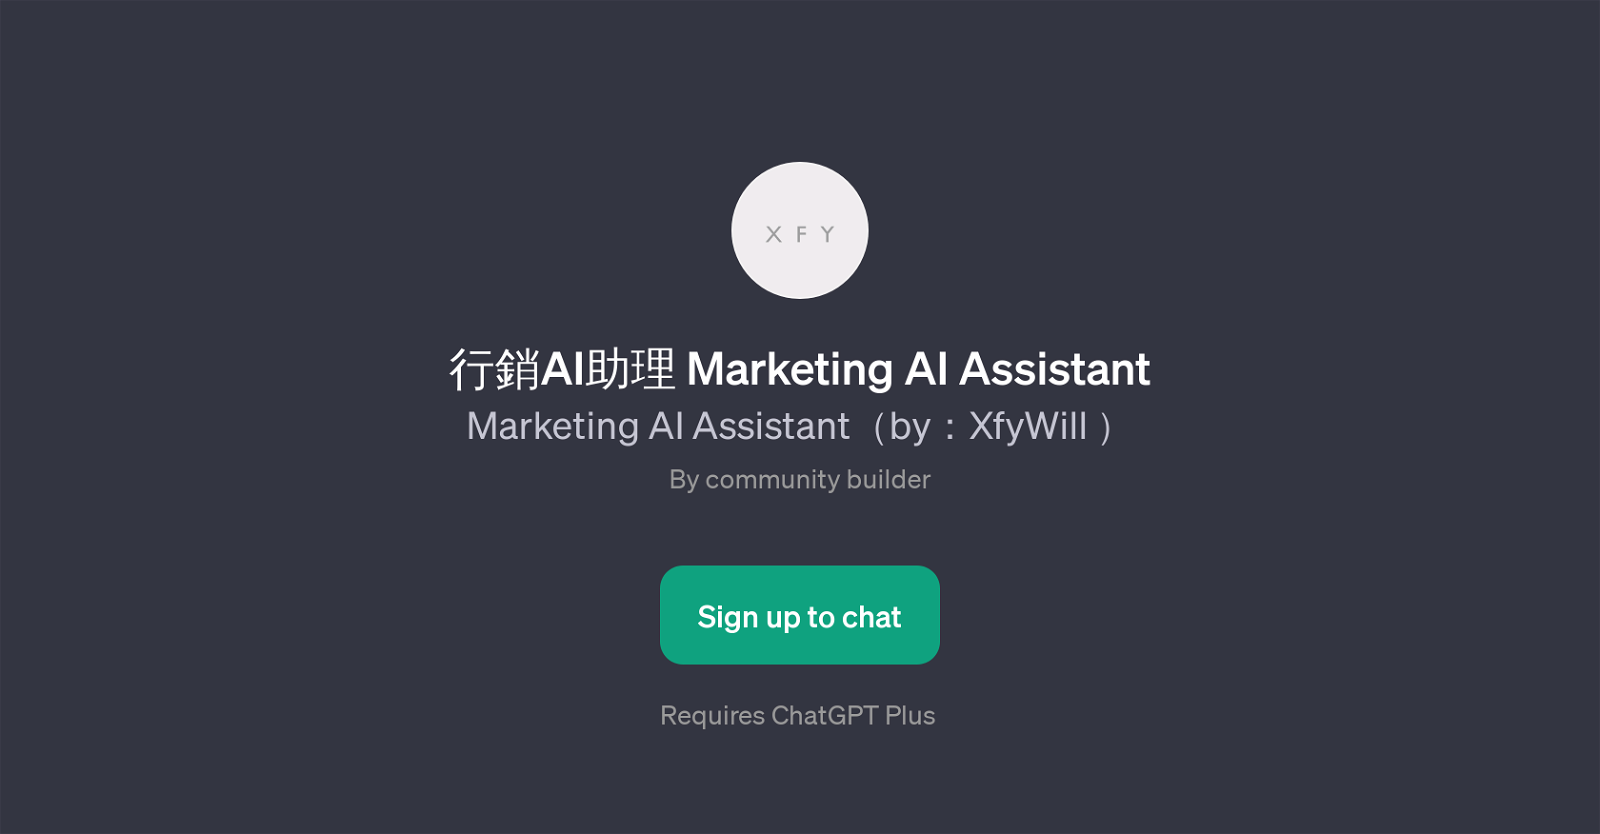 Marketing AI Assistant website